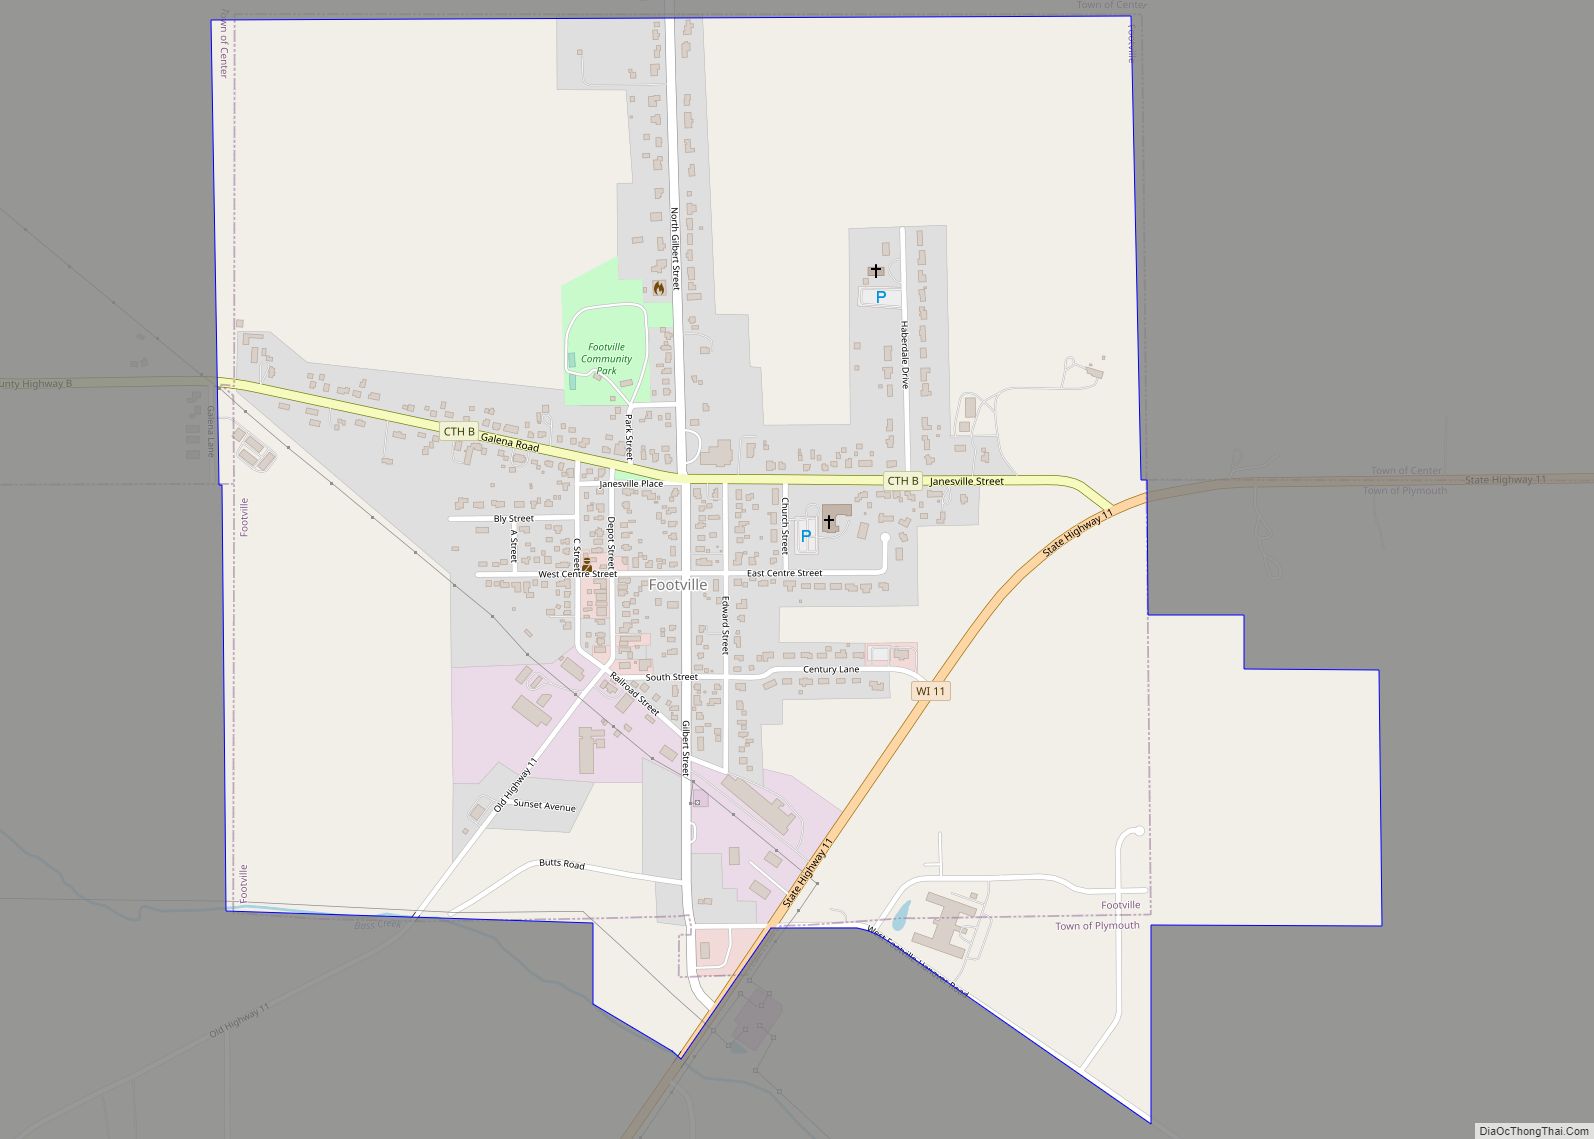 Map of Footville village